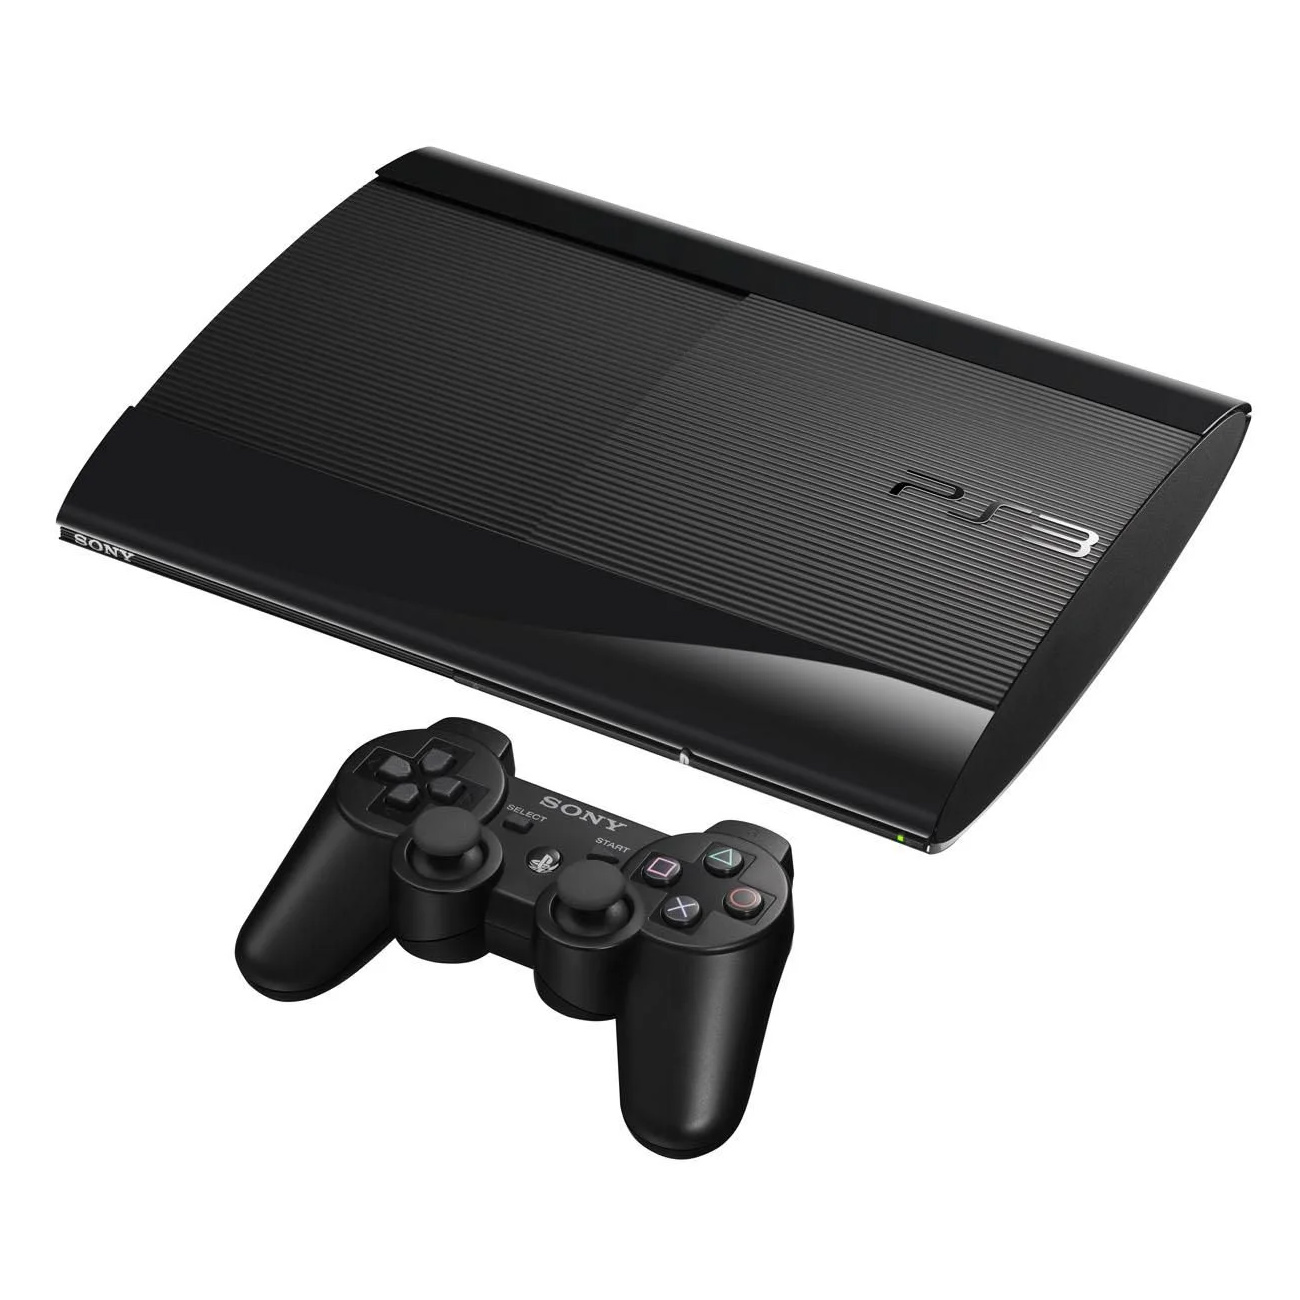 Console Playstation 3 Super Slim 160GB com Controle Dualshock 3 Sony Seminovo